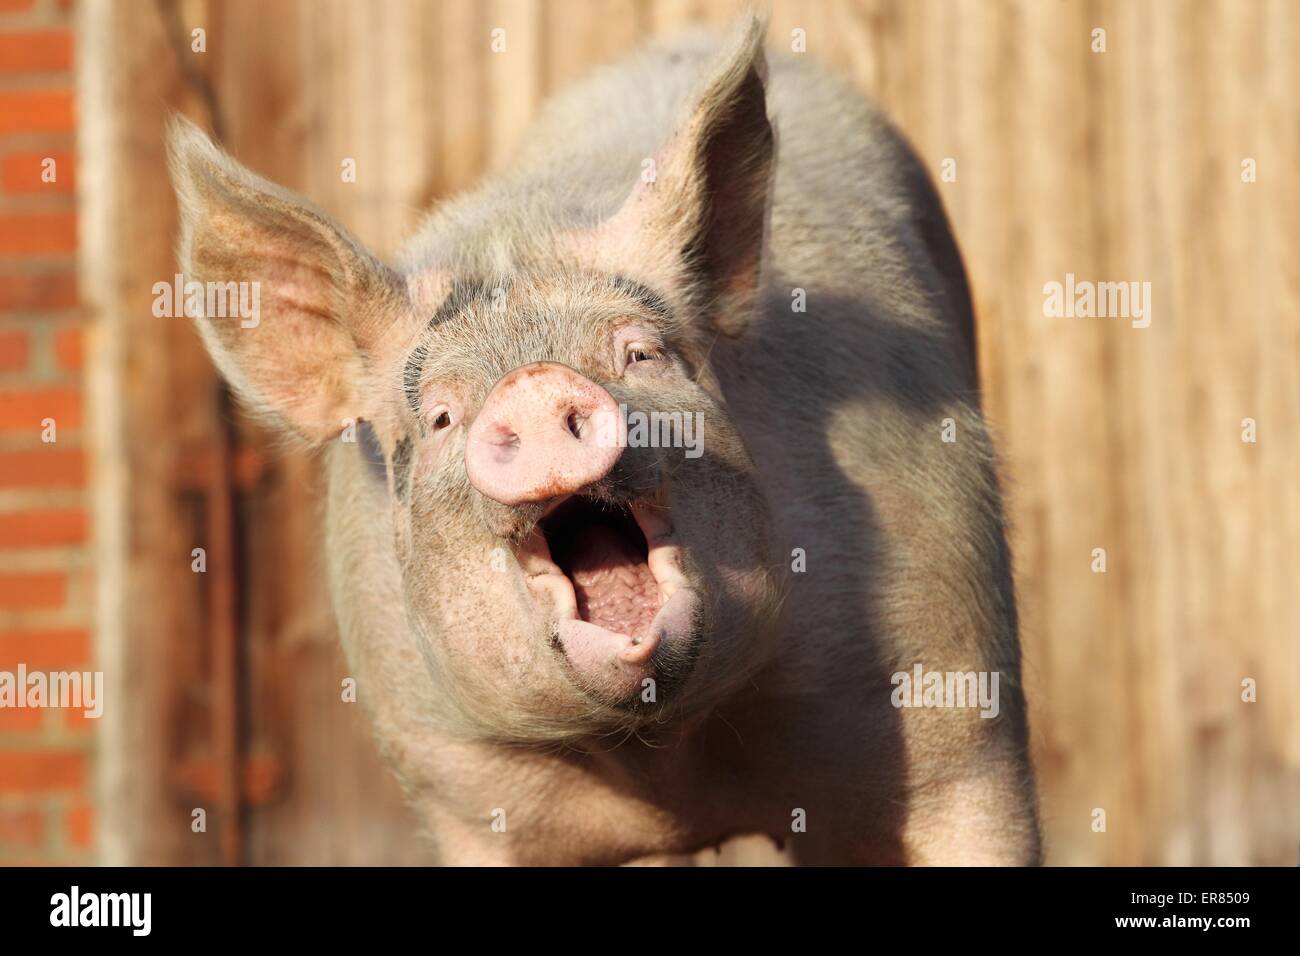 pig Stock Photo